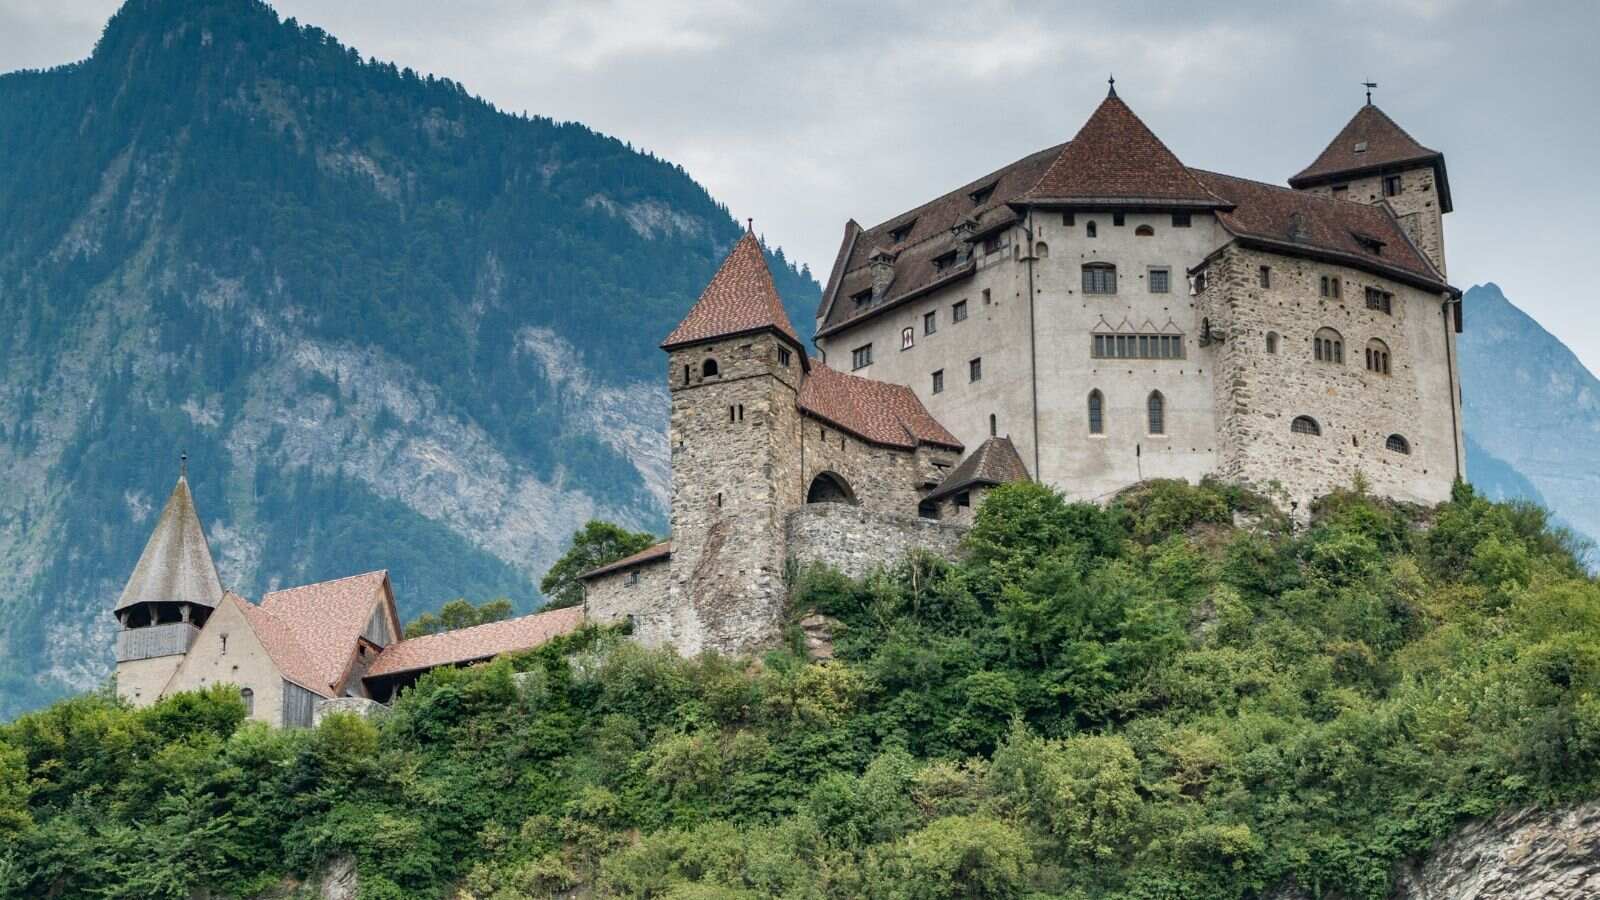 Top 10 things to do in Liechtenstein in 1 day - Best Guide